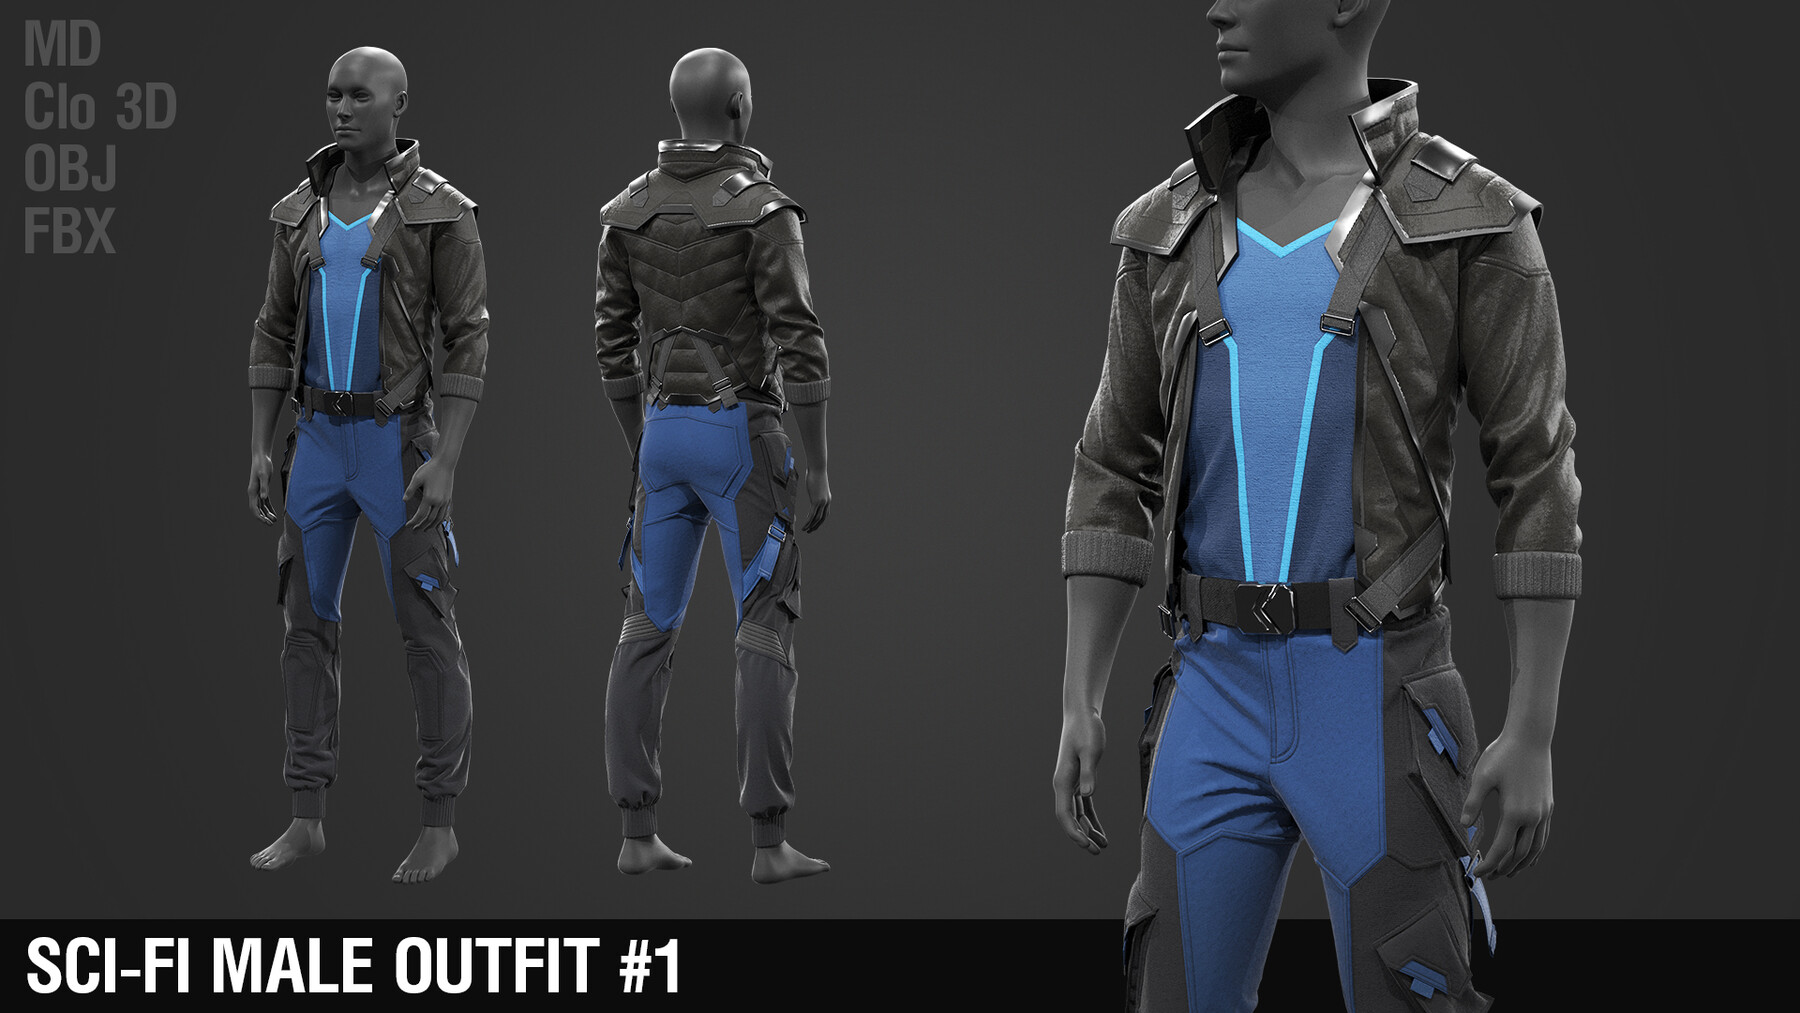 ArtStation - Sci-fi male outfit #1 / Cyberpunk / Future / Fantastic / Urban  / Tactical / Jacket / Shirt / Pants / Set / Marvelous Designer | Game Assets